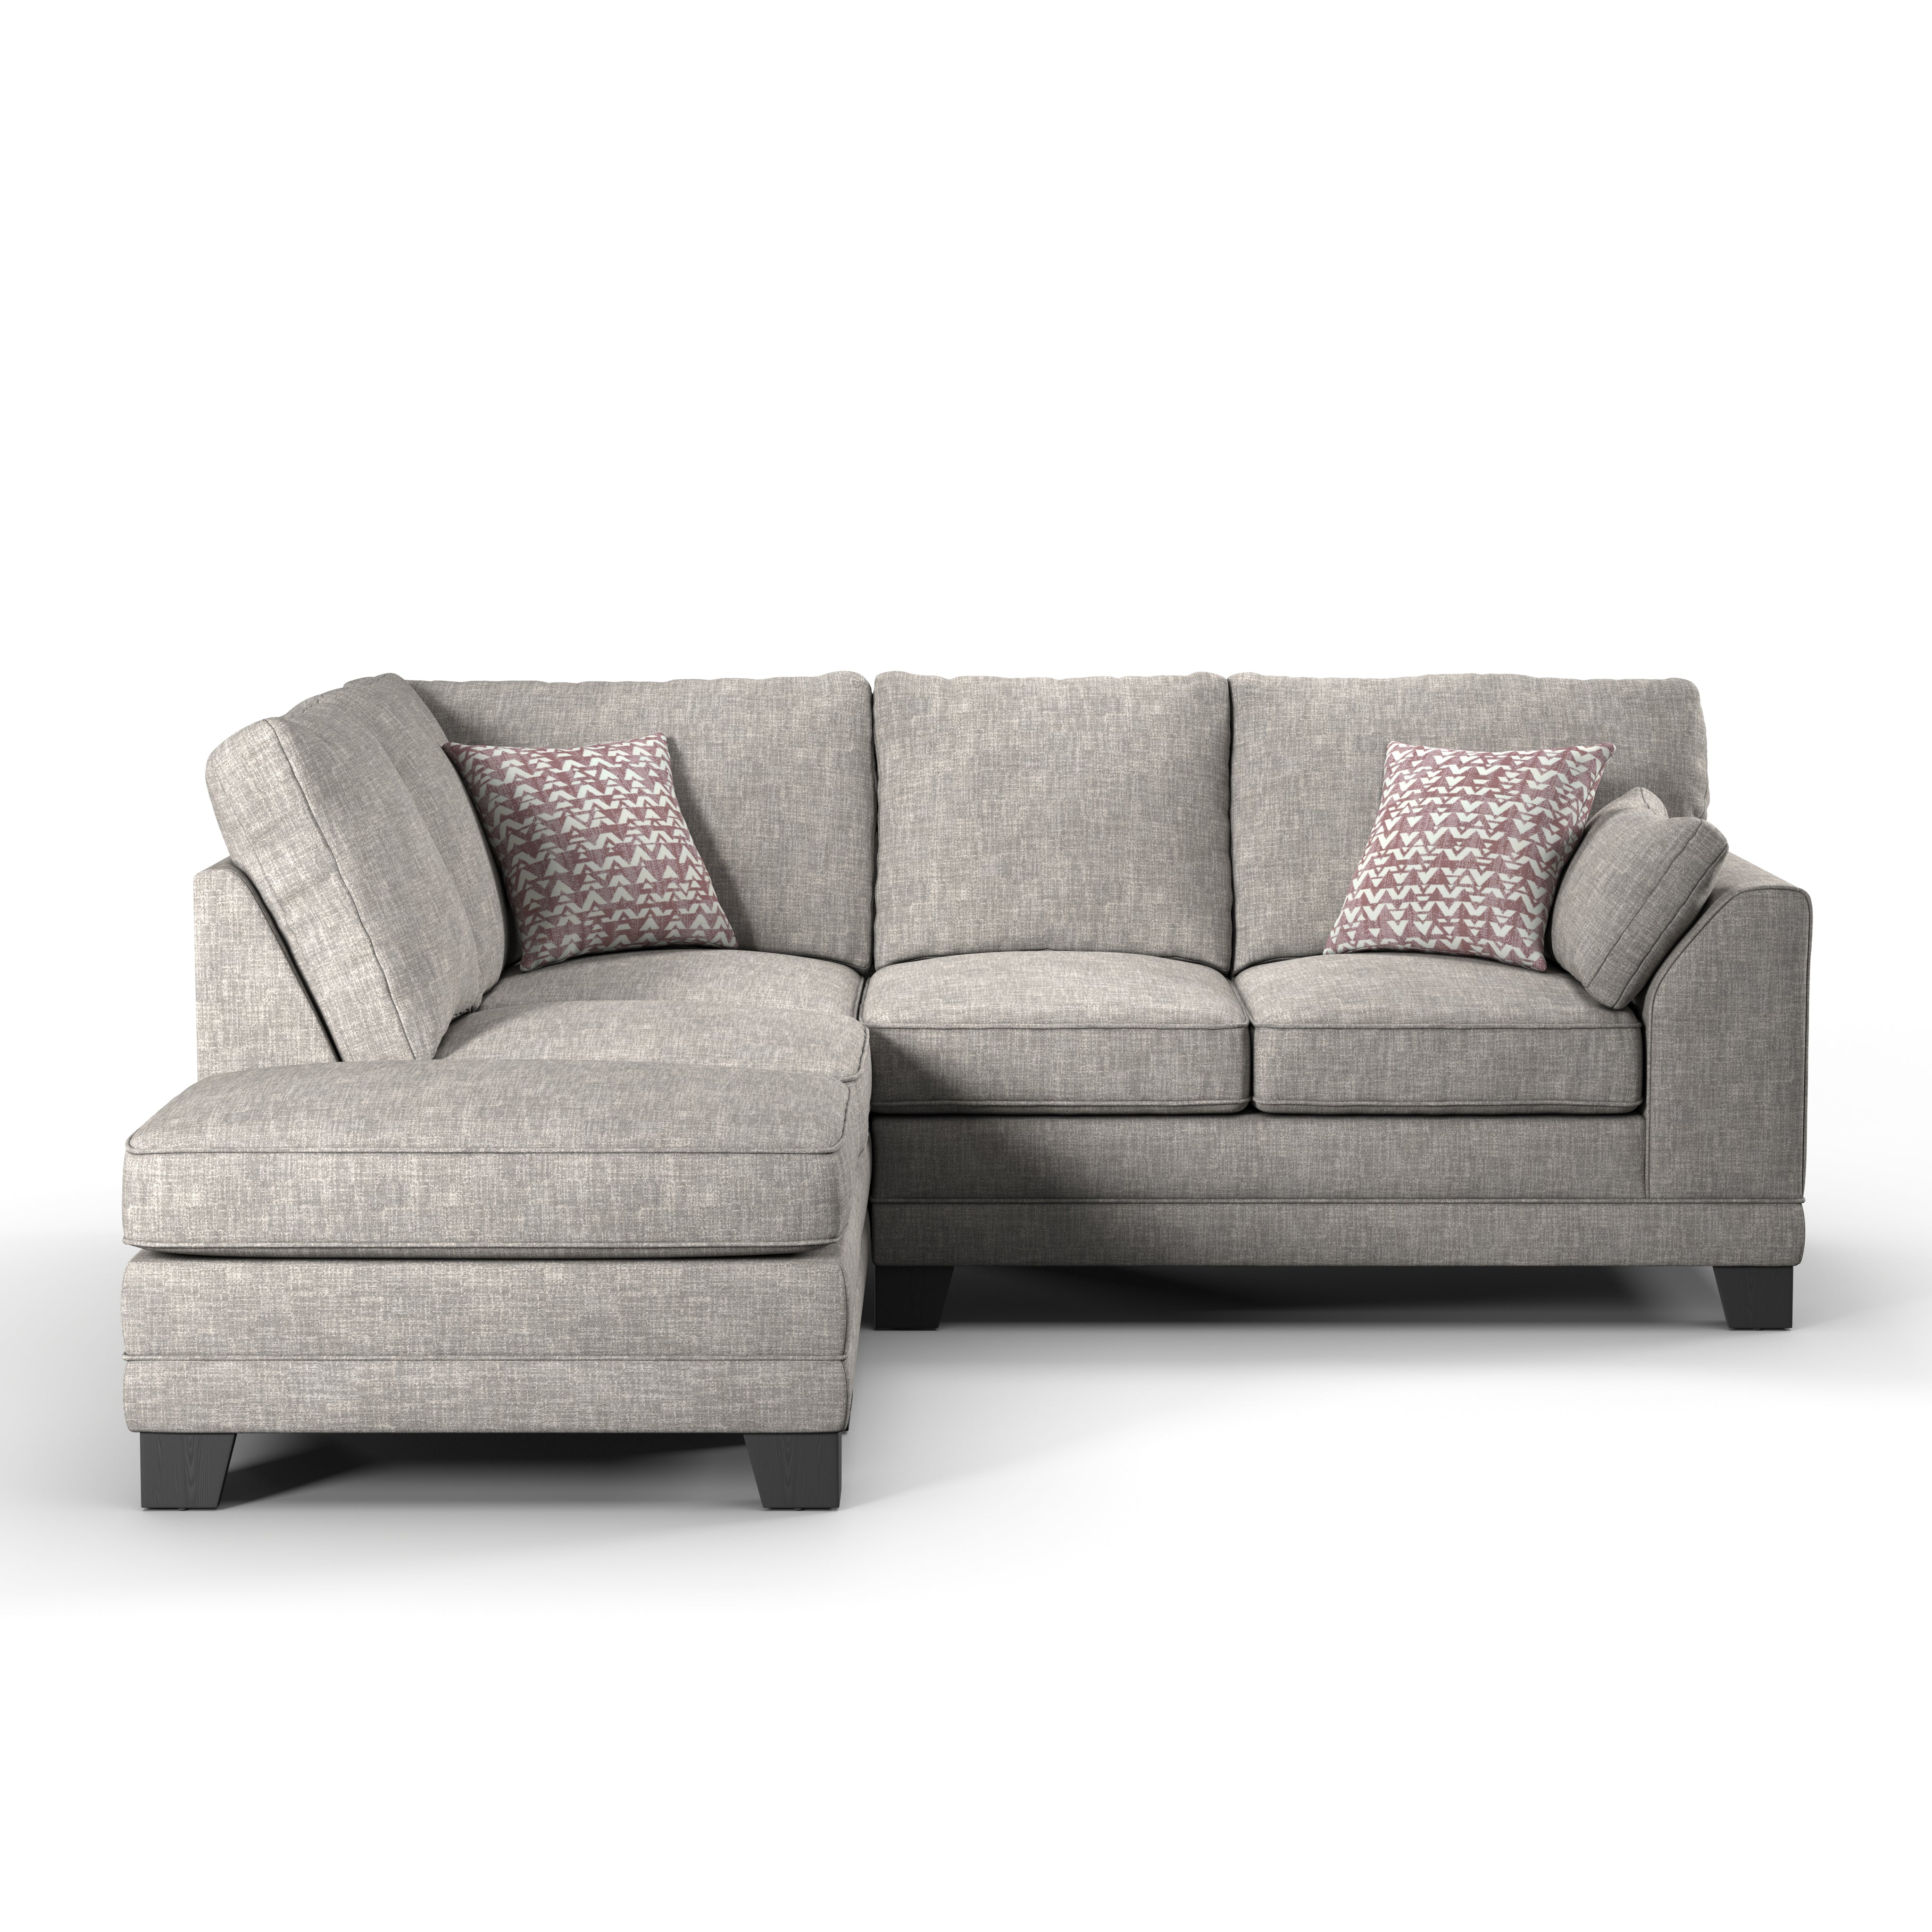 Hilliard Fabric Corner Sofa Collection